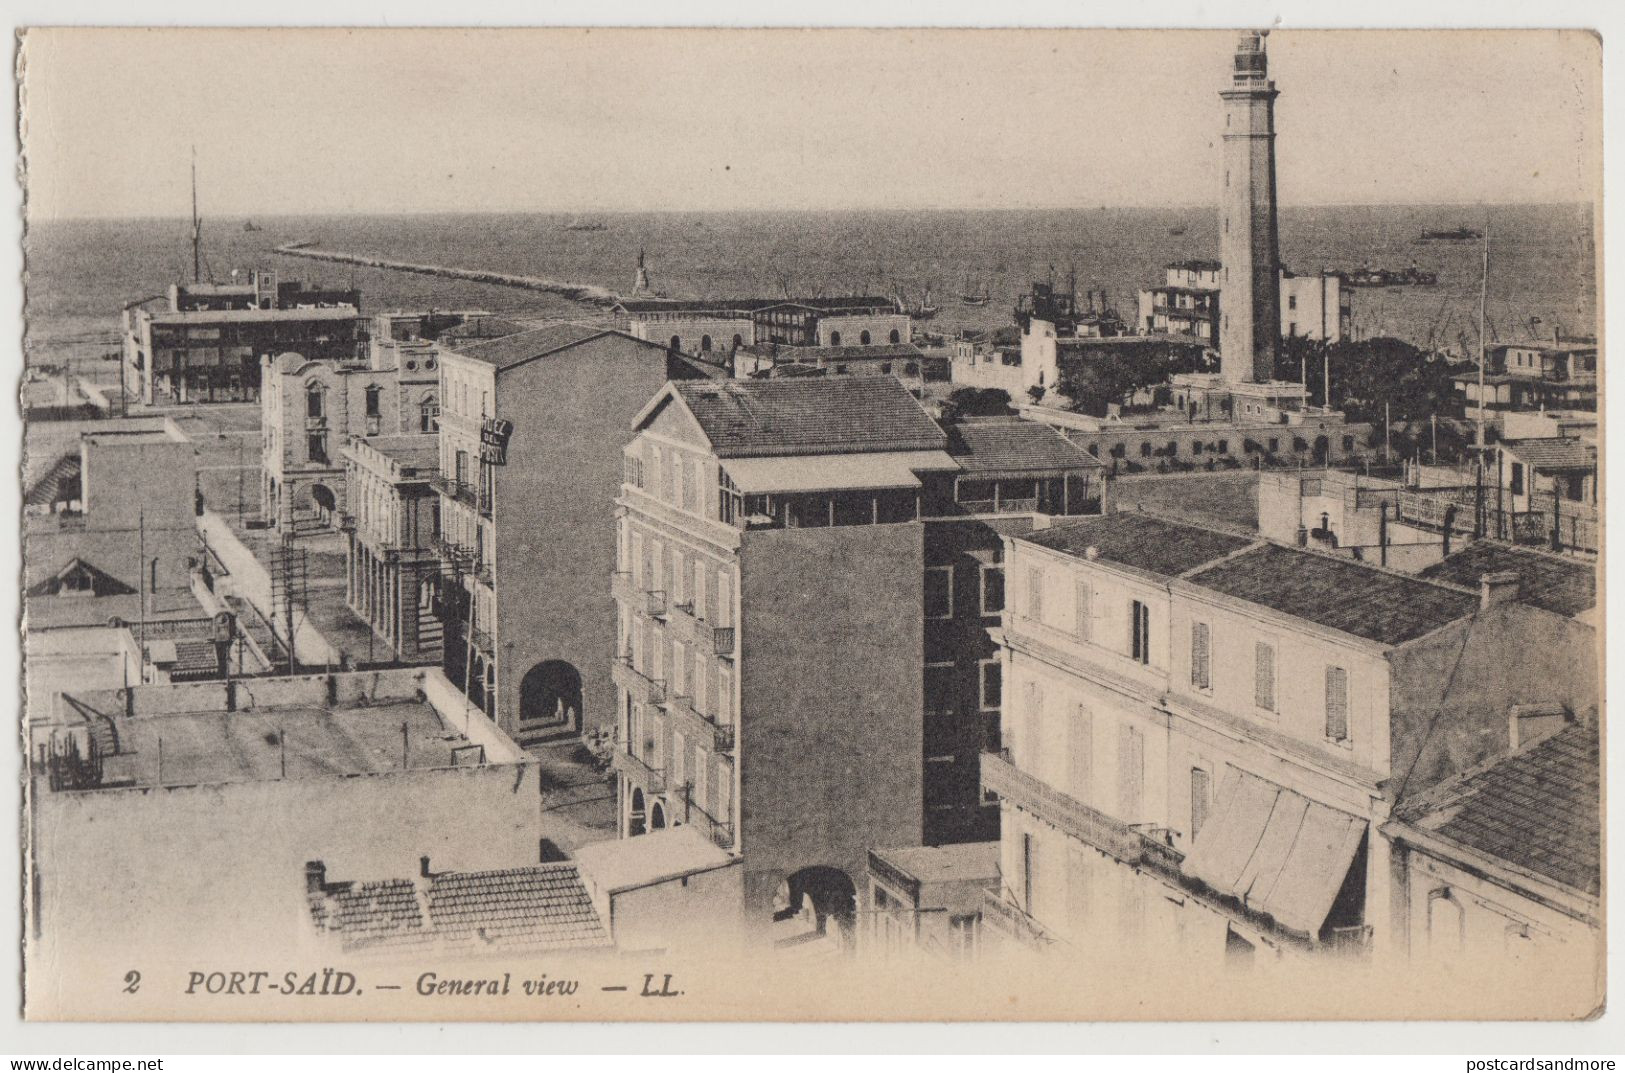 Egypt Port Said & Suez Canal Lot of 15 unused postcards ca. 1920 Levy Fils & Cie - Isaac Behar